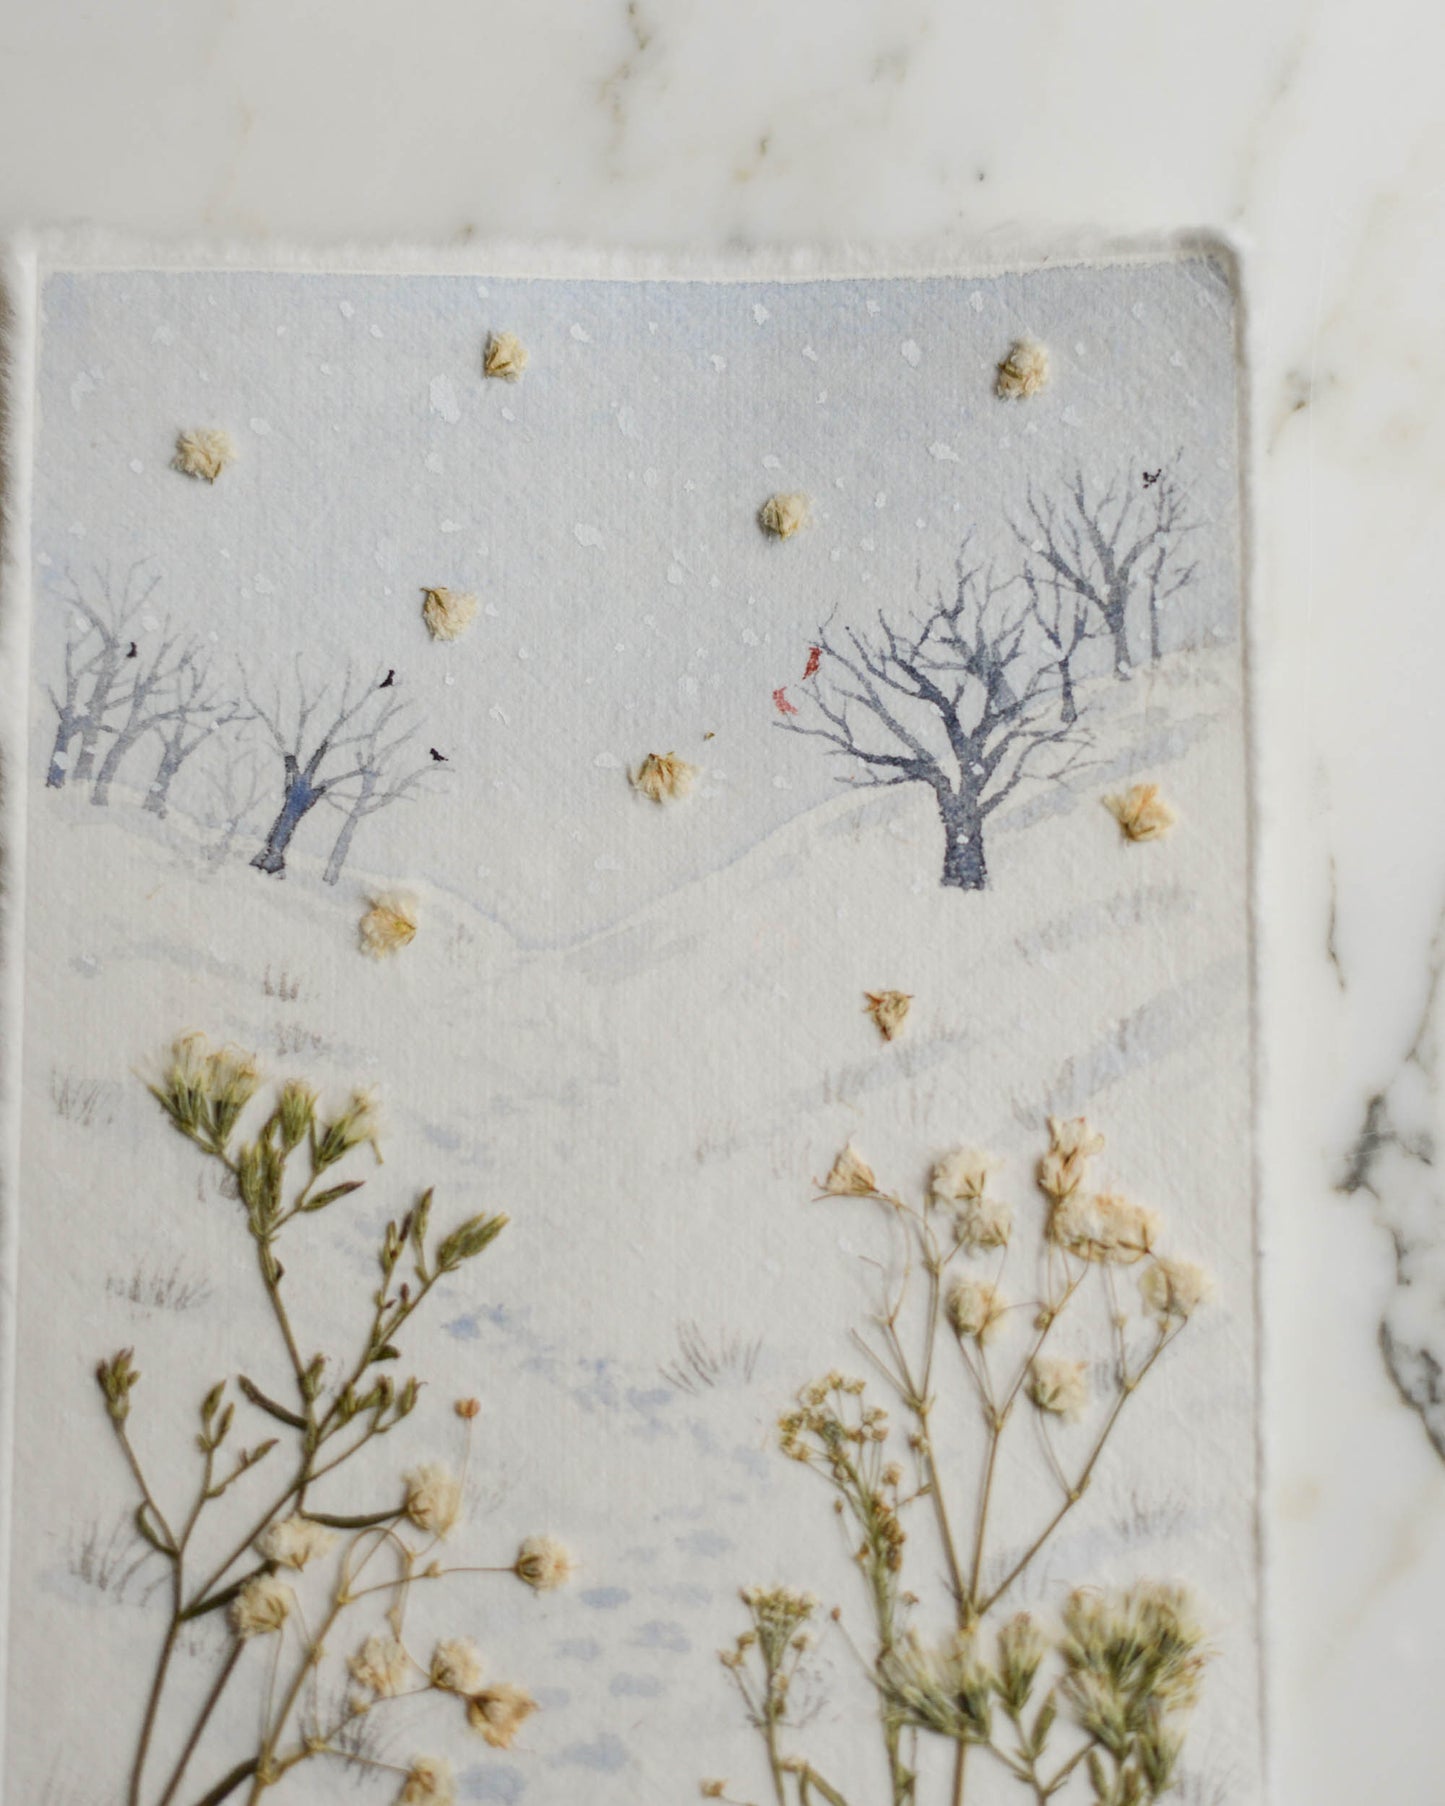 Snow Day: Winter Walk - Original Artwork, 5x7" Watercolor and Pressed Flowers